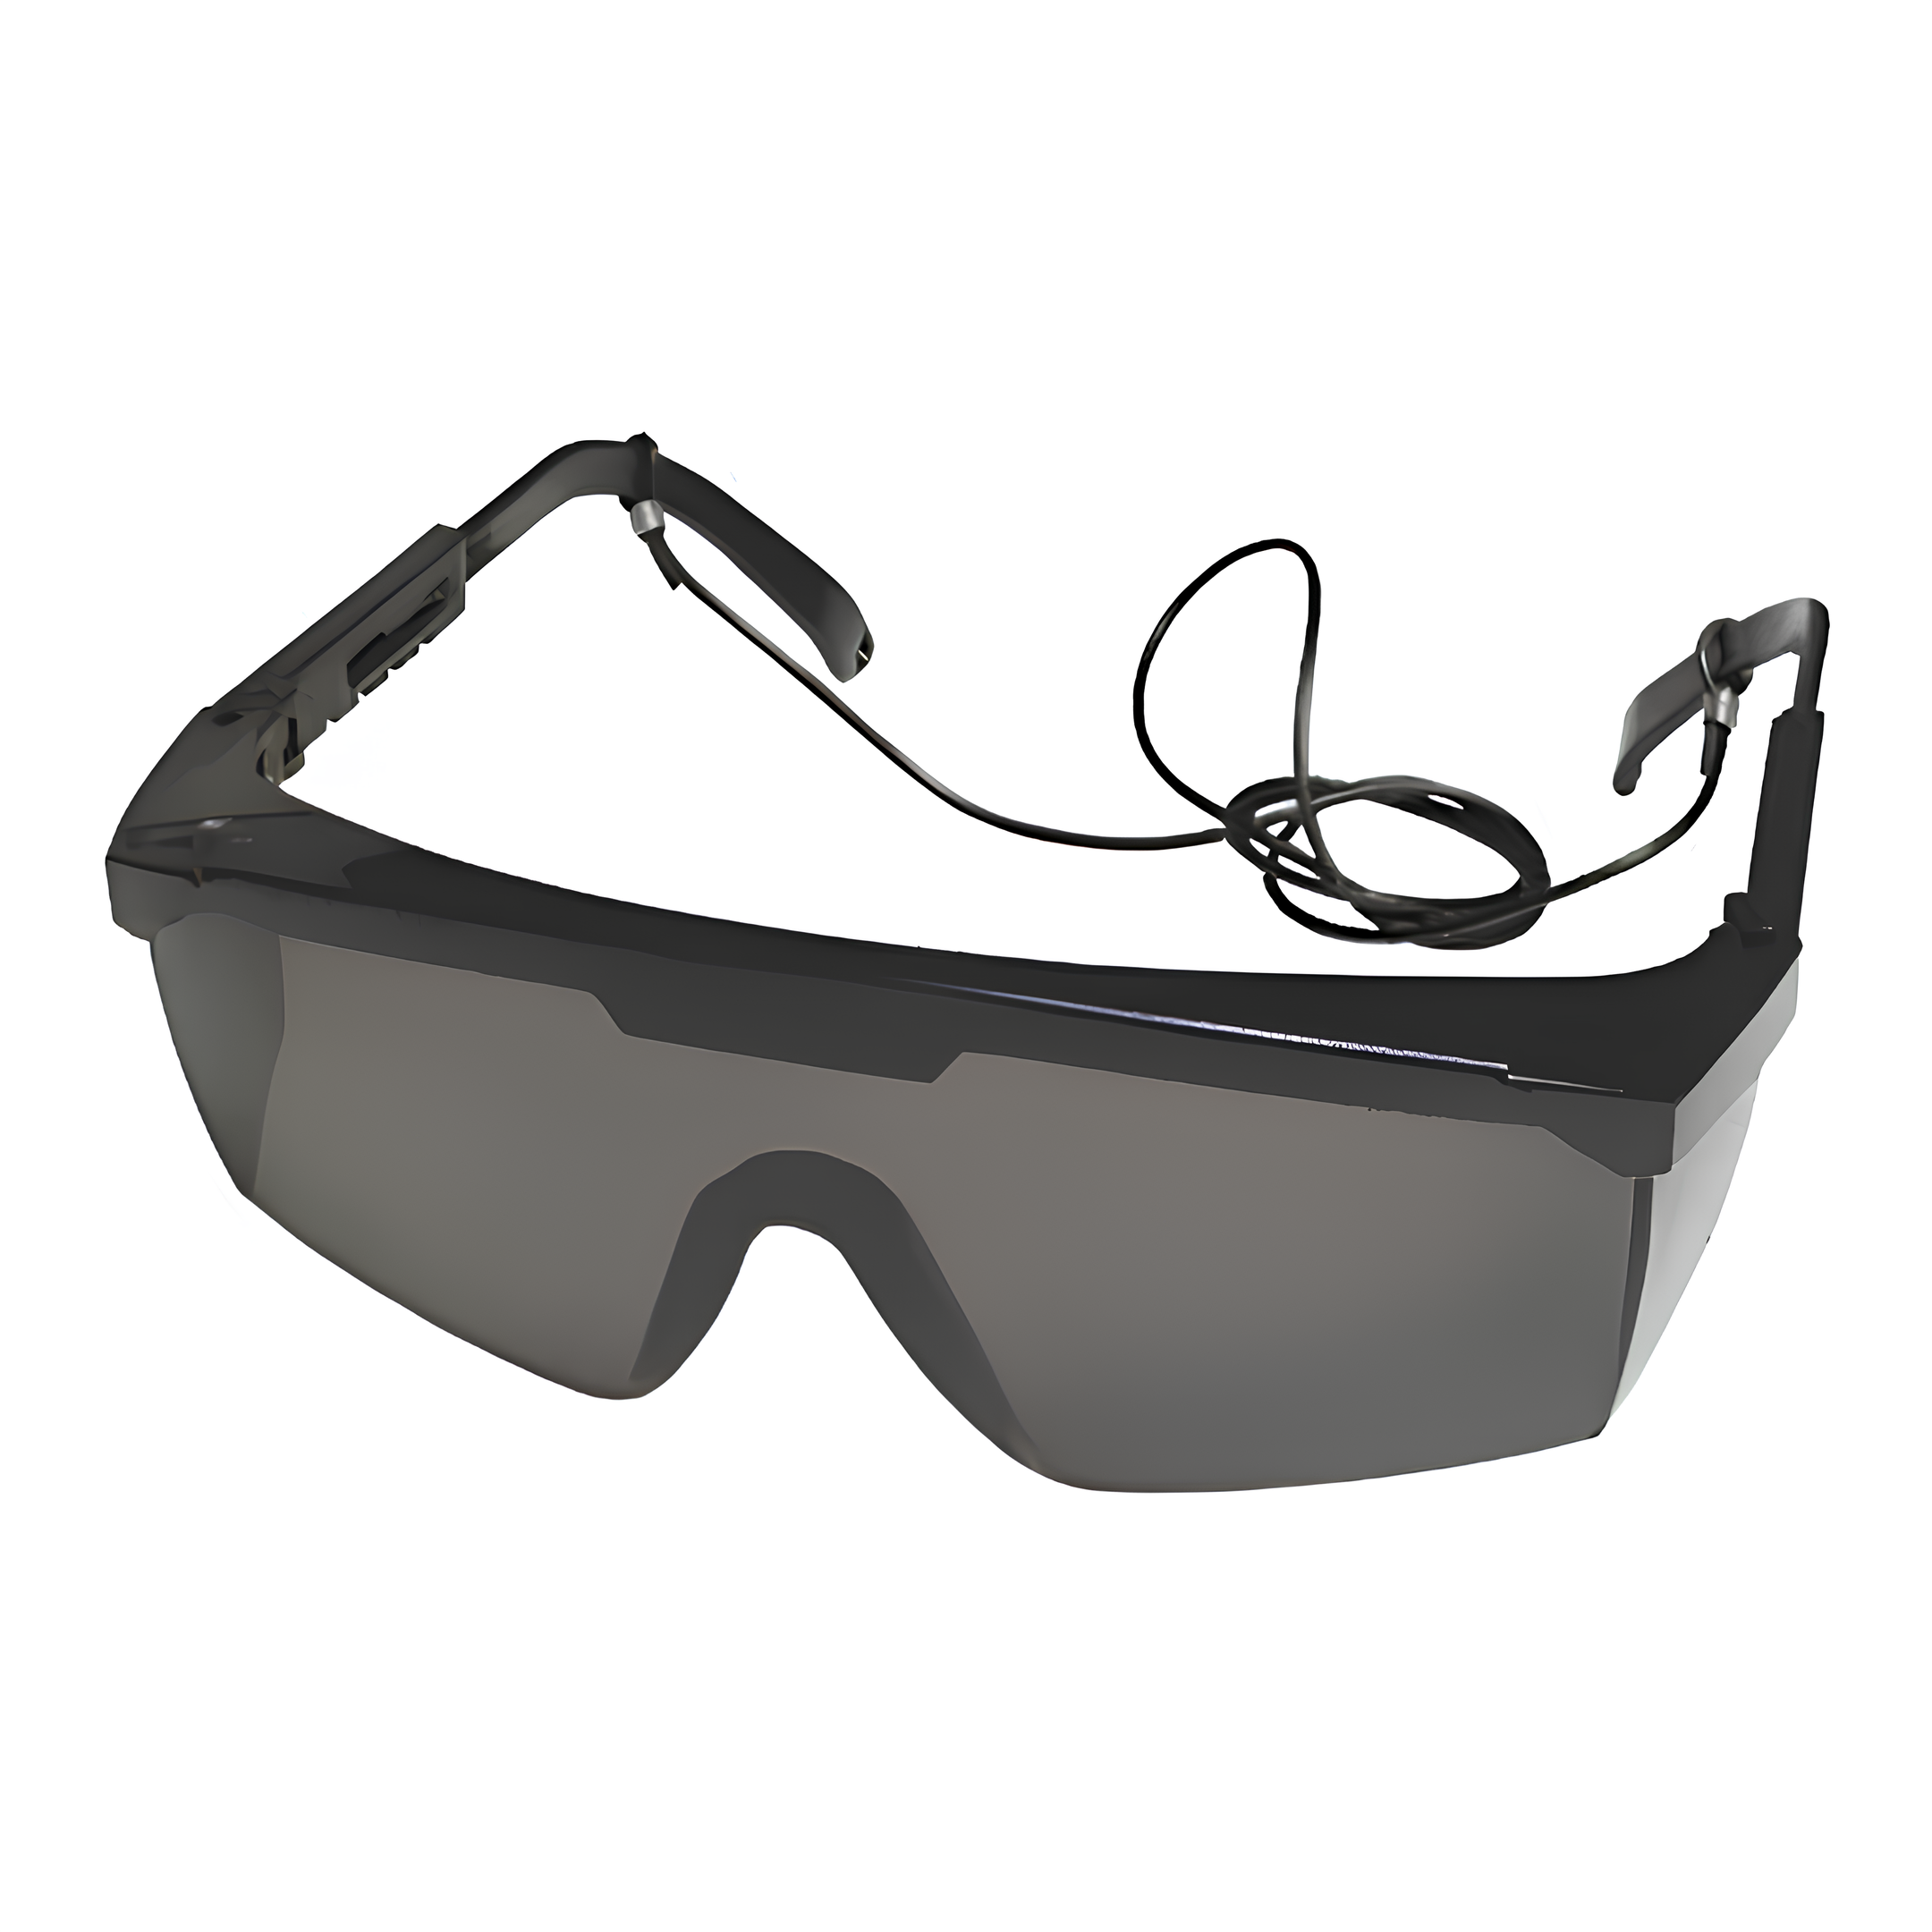 Oculos de Segurança Vision 3000 F Cinza Fume HB004003115 3M